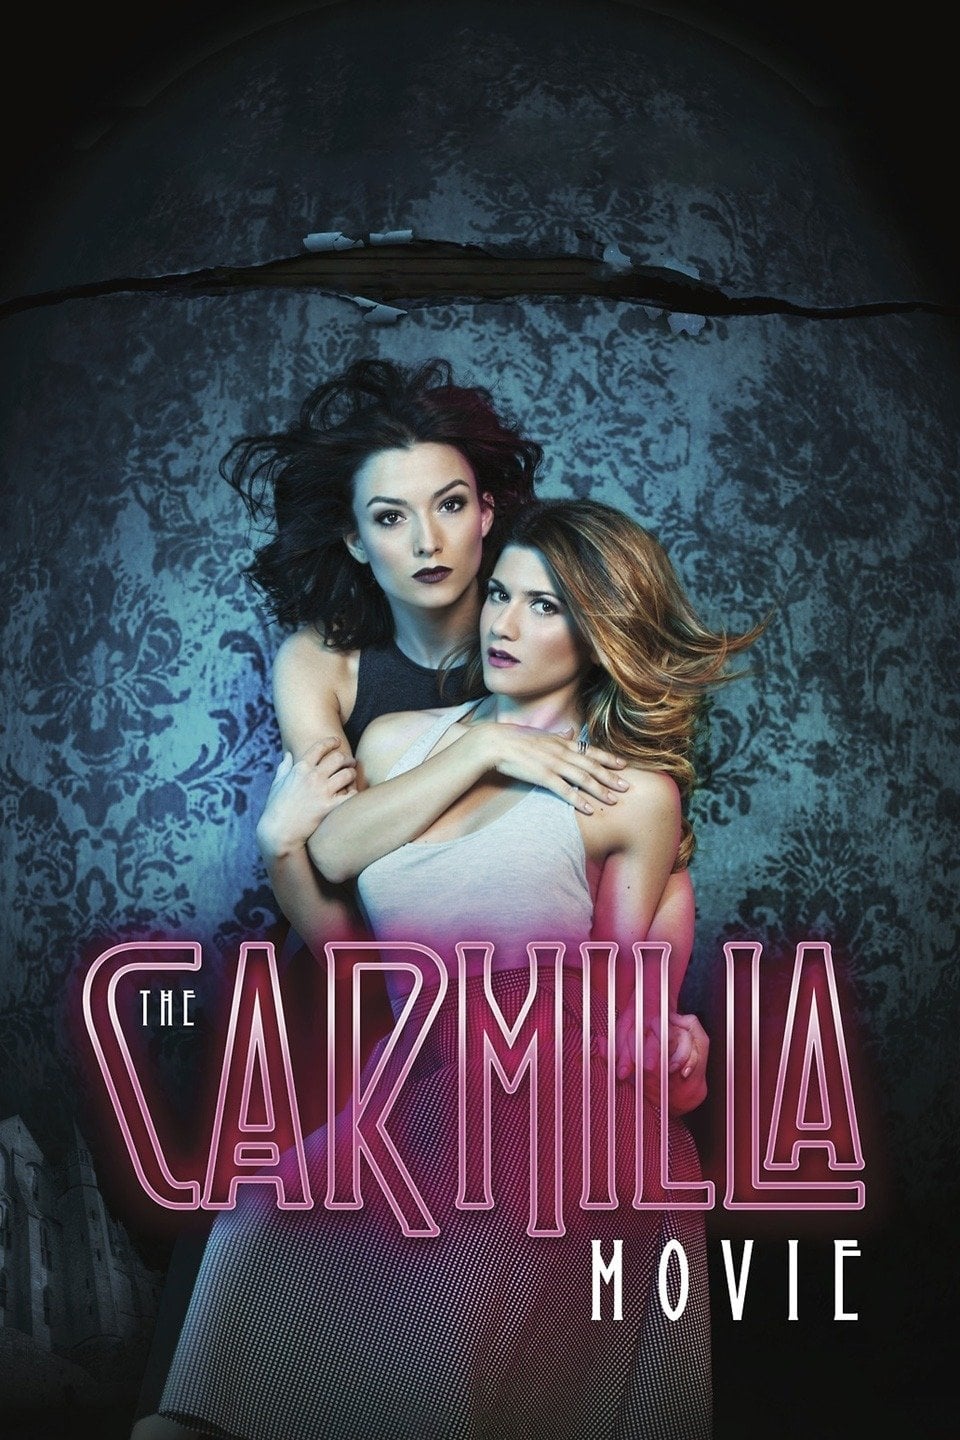 The Carmilla Movie film